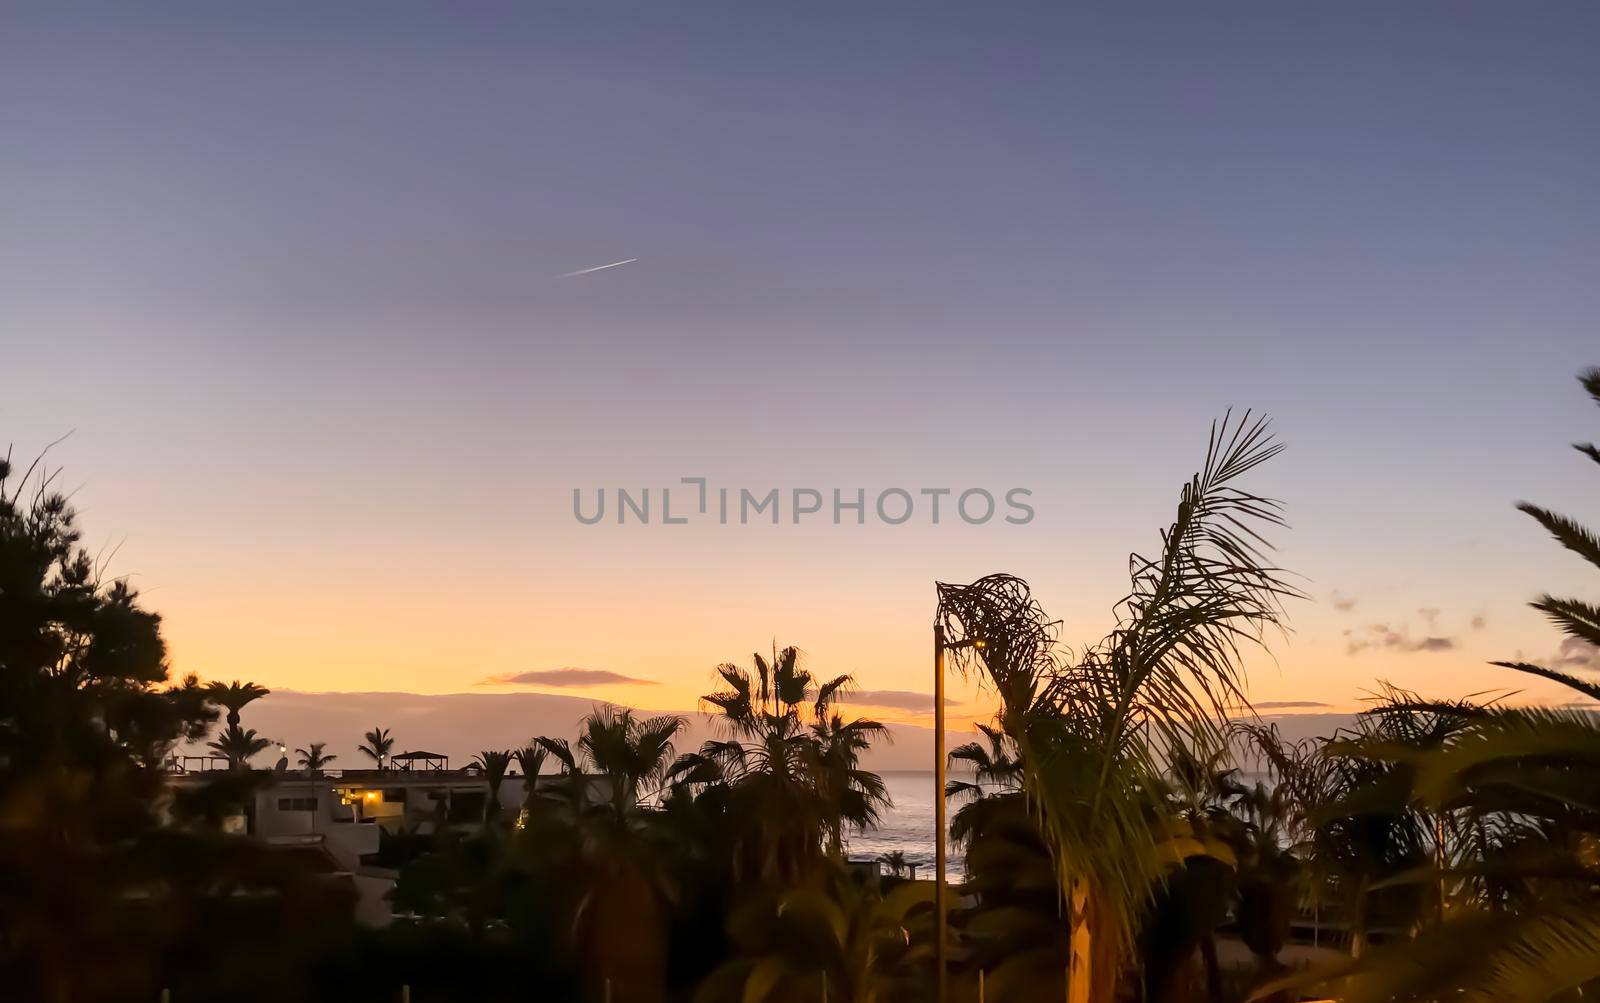 Sunset on Tenerife. High quality photo